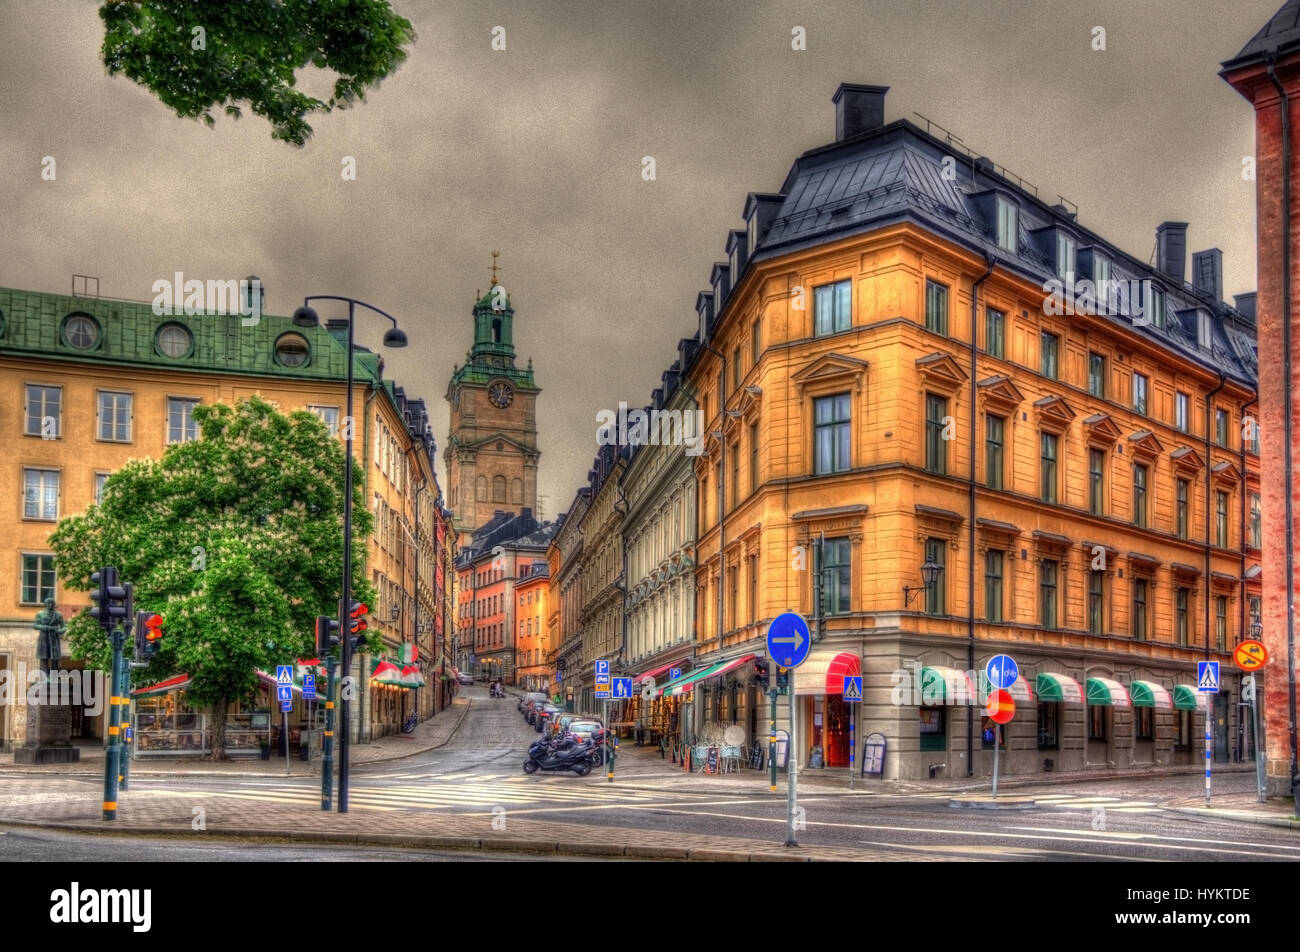 Stockholm city center - Sweden Stock Photo